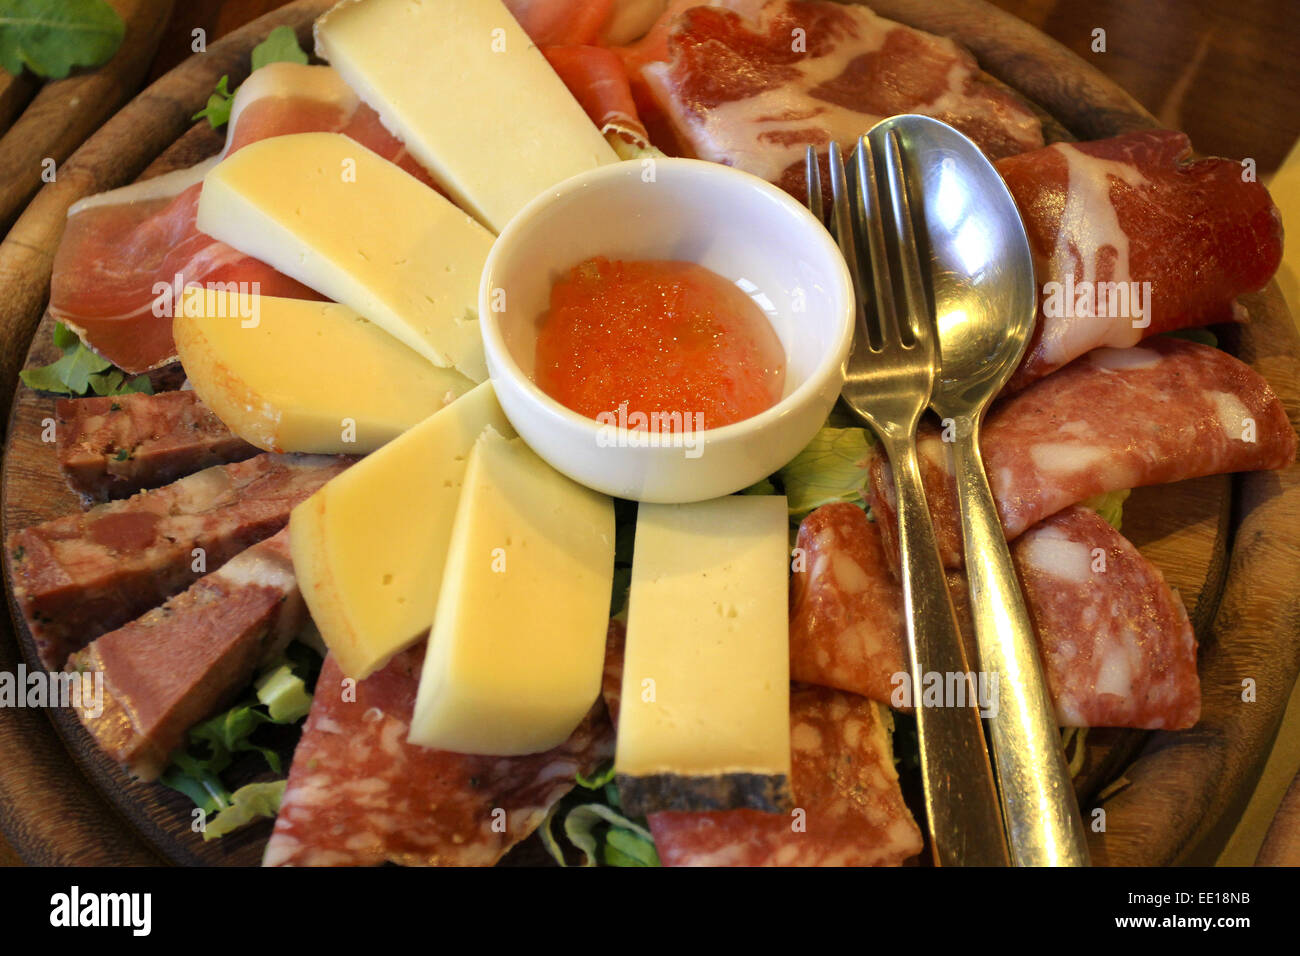 Essen, Wurst und Käse aus der Toskana, toskanische Spezialitäten, Food, meats and cheeses from Tuscany, Tuscan specialties, nutr Stock Photo